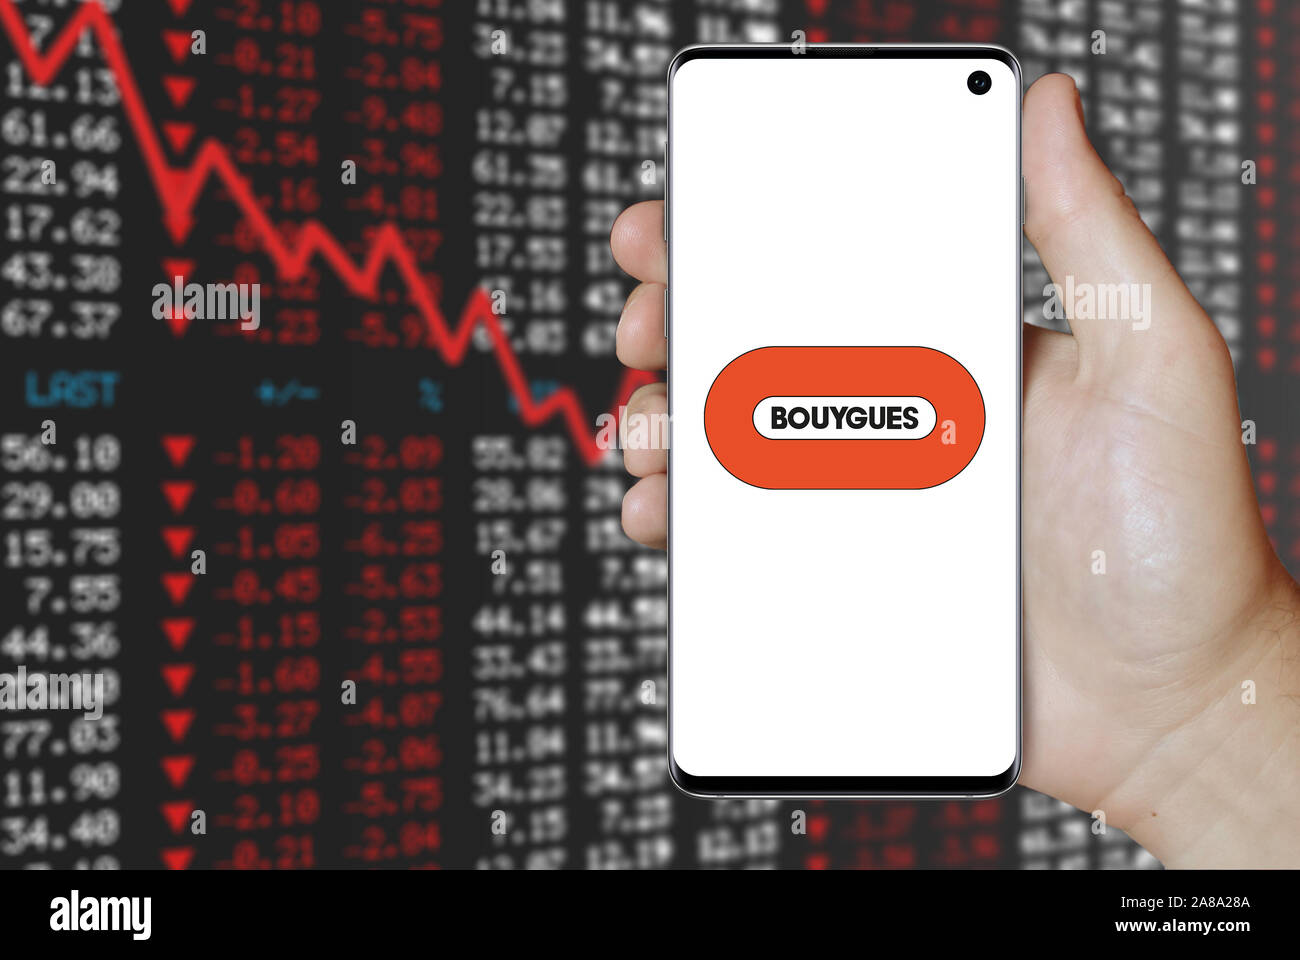 Logo of public company Bouygues displayed on a smartphone. Negative stock market background. Credit: PIXDUCE Stock Photo